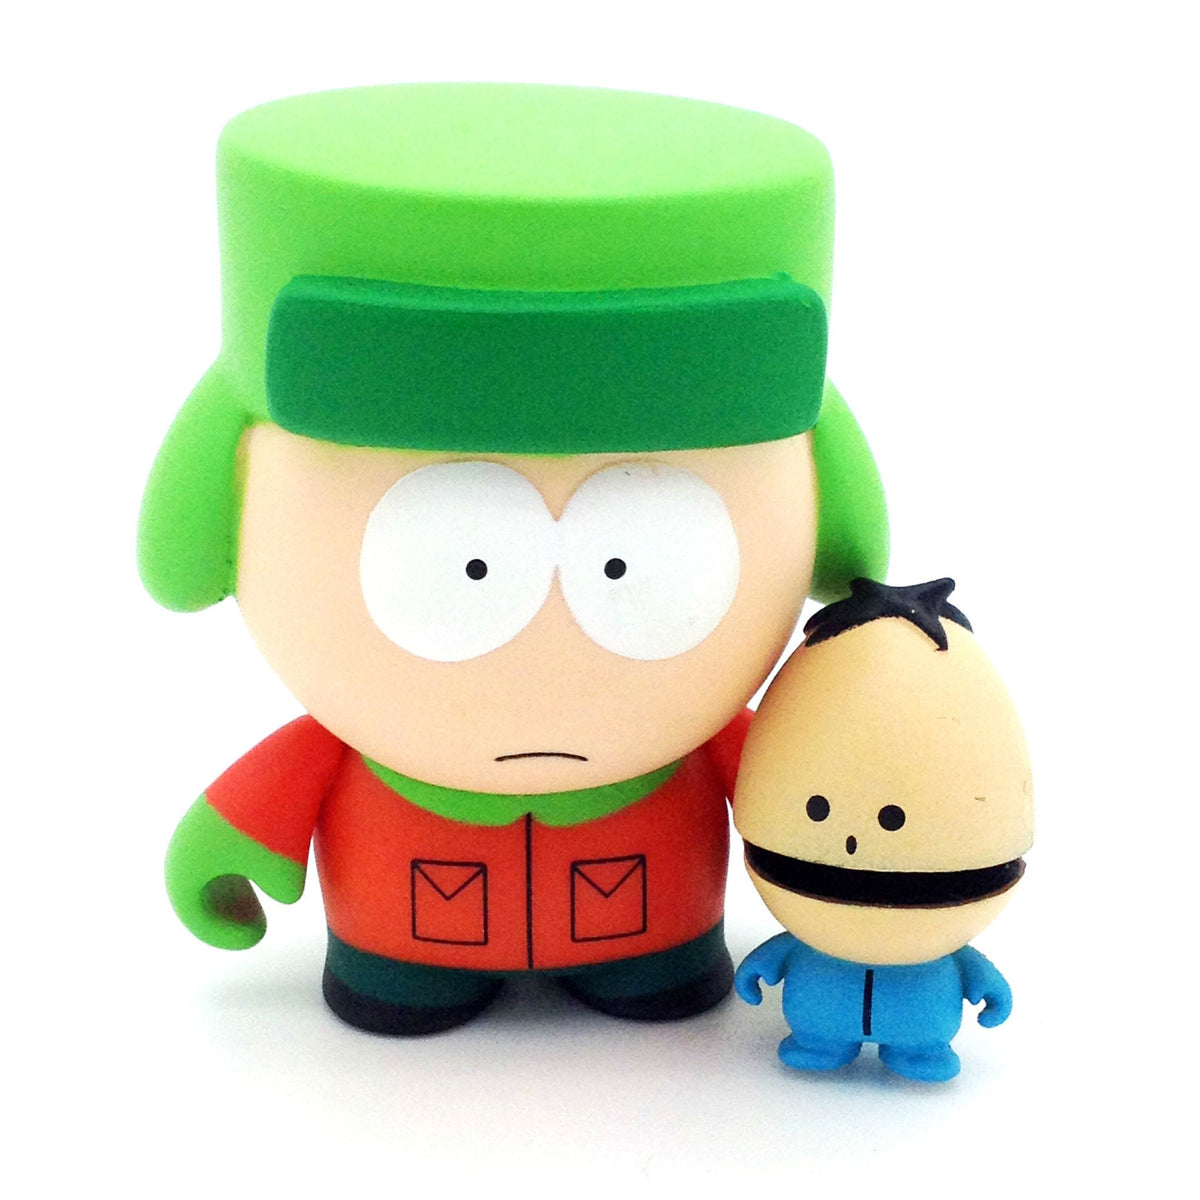 Kidrobot x South Park Series - Kyle - Mindzai
